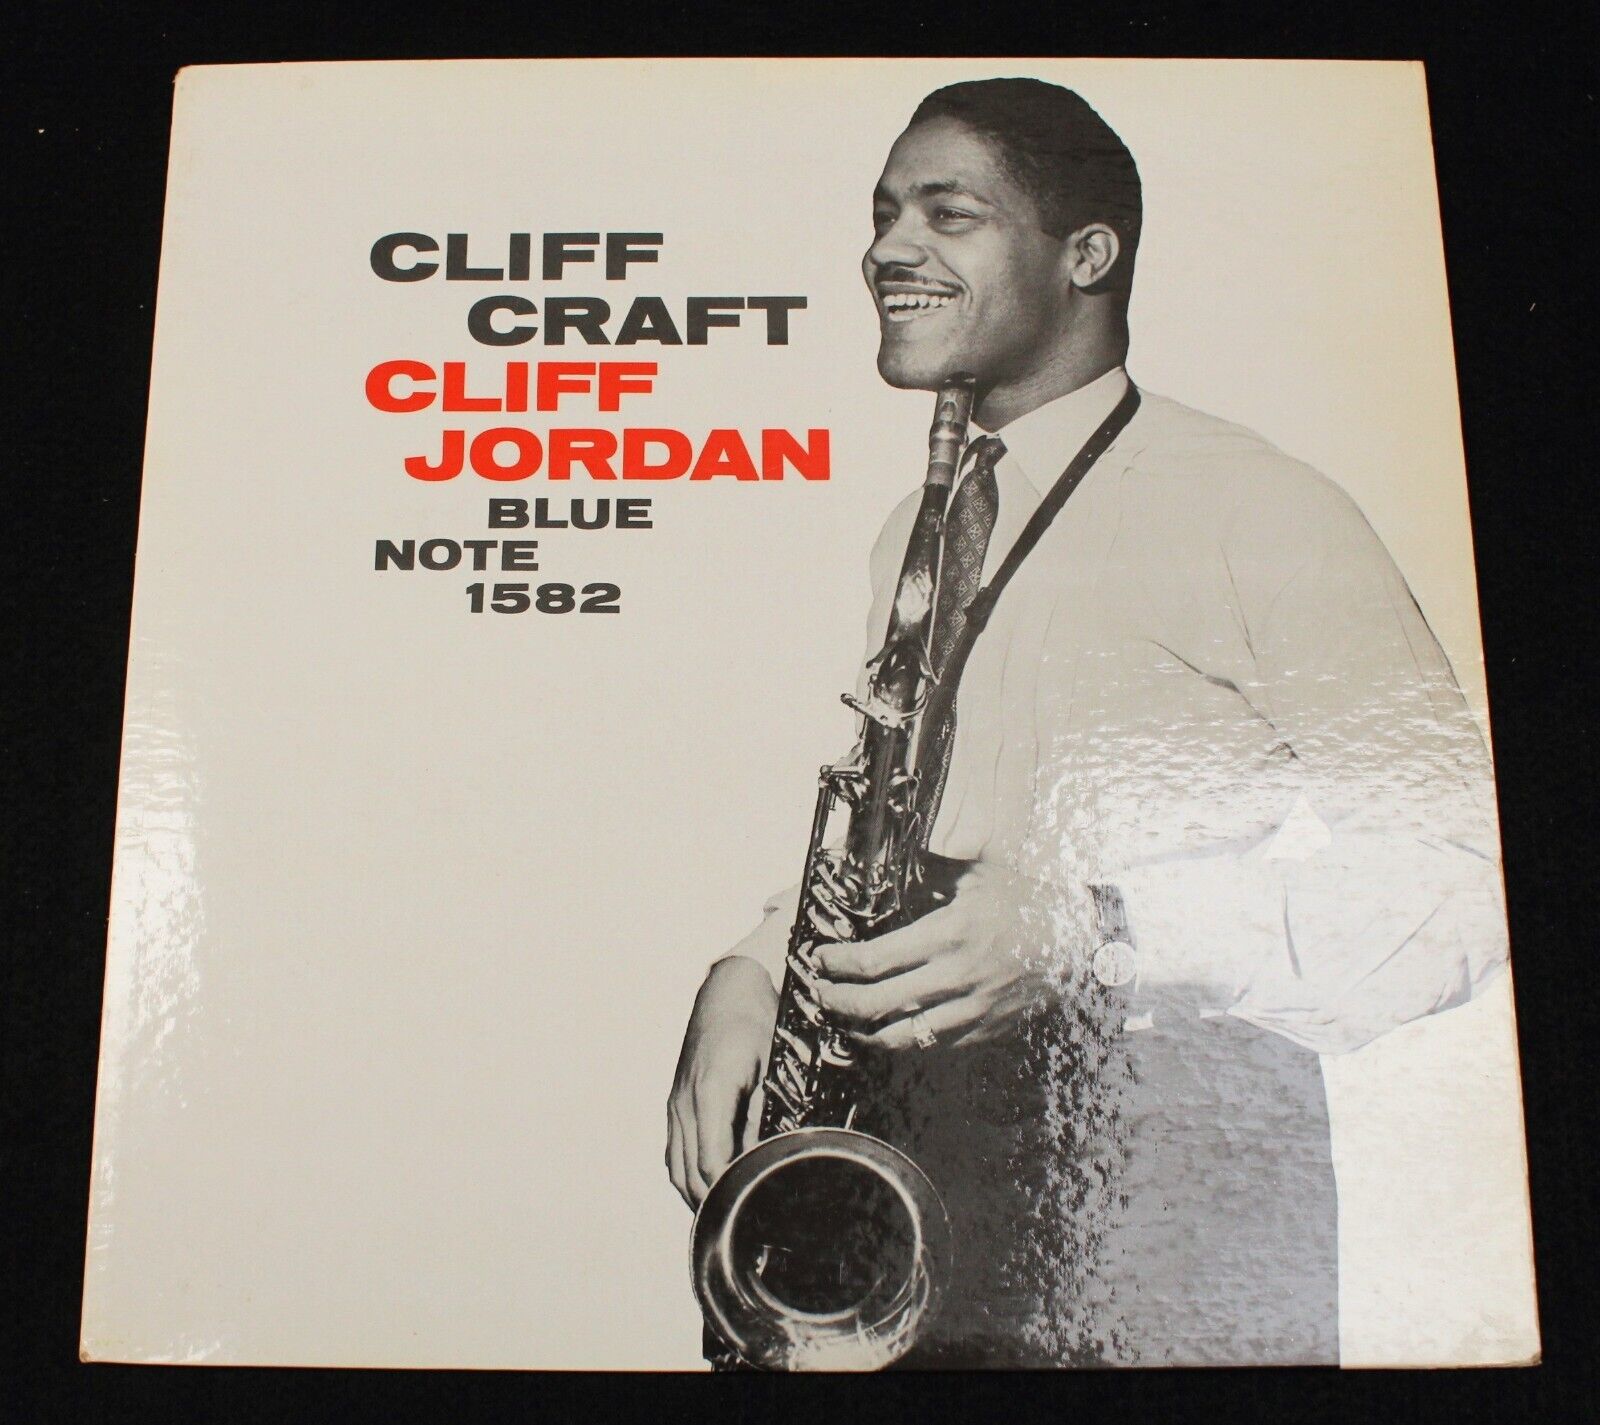 CLIFF JORDAN Blue Note 1582 Cliff Craft Superb Jazz LP EX